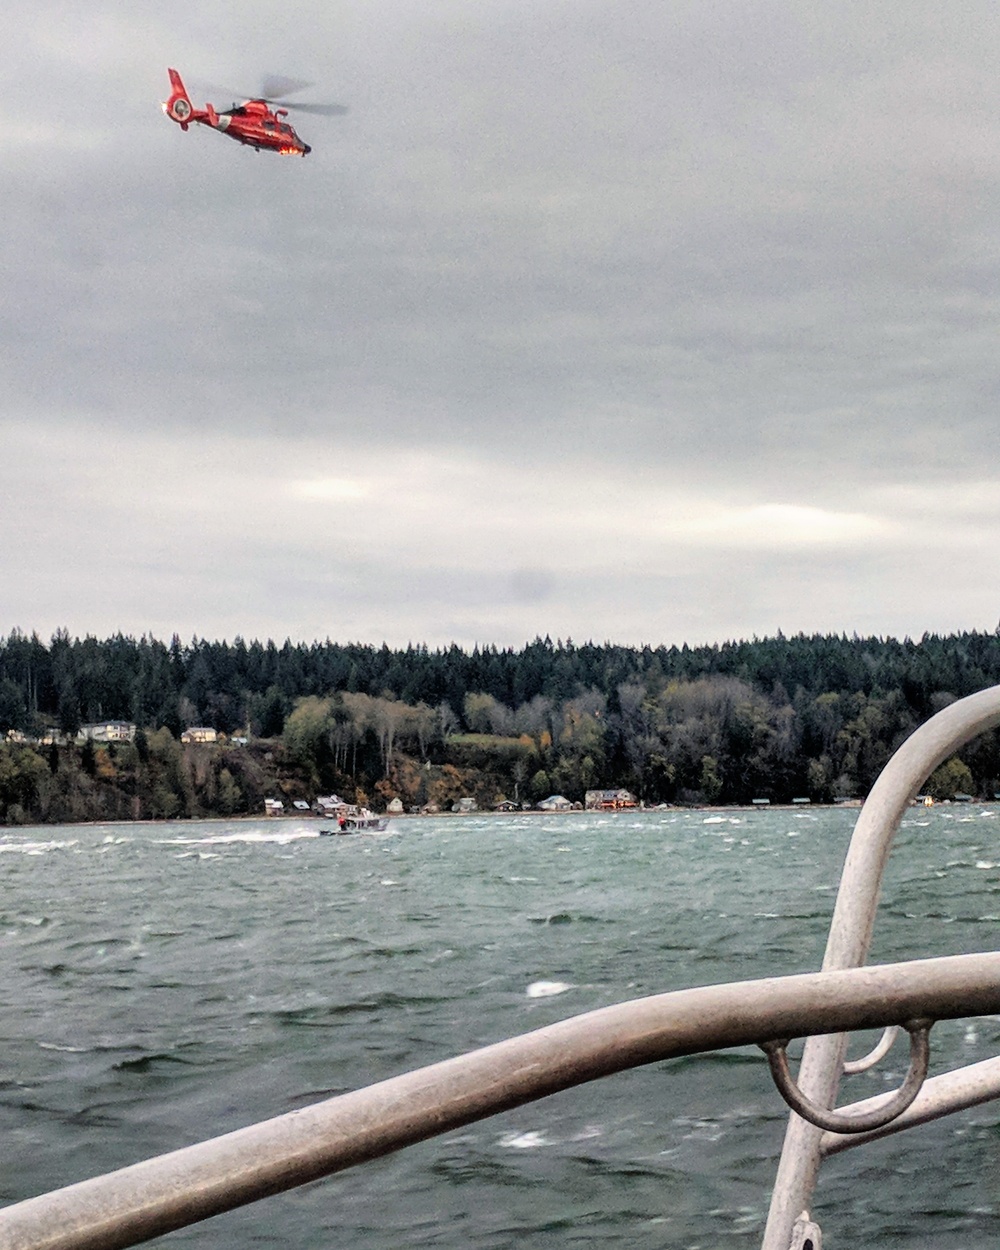 Coast Guard, local agencies rescue two wind surfers north of Everett, Wash.